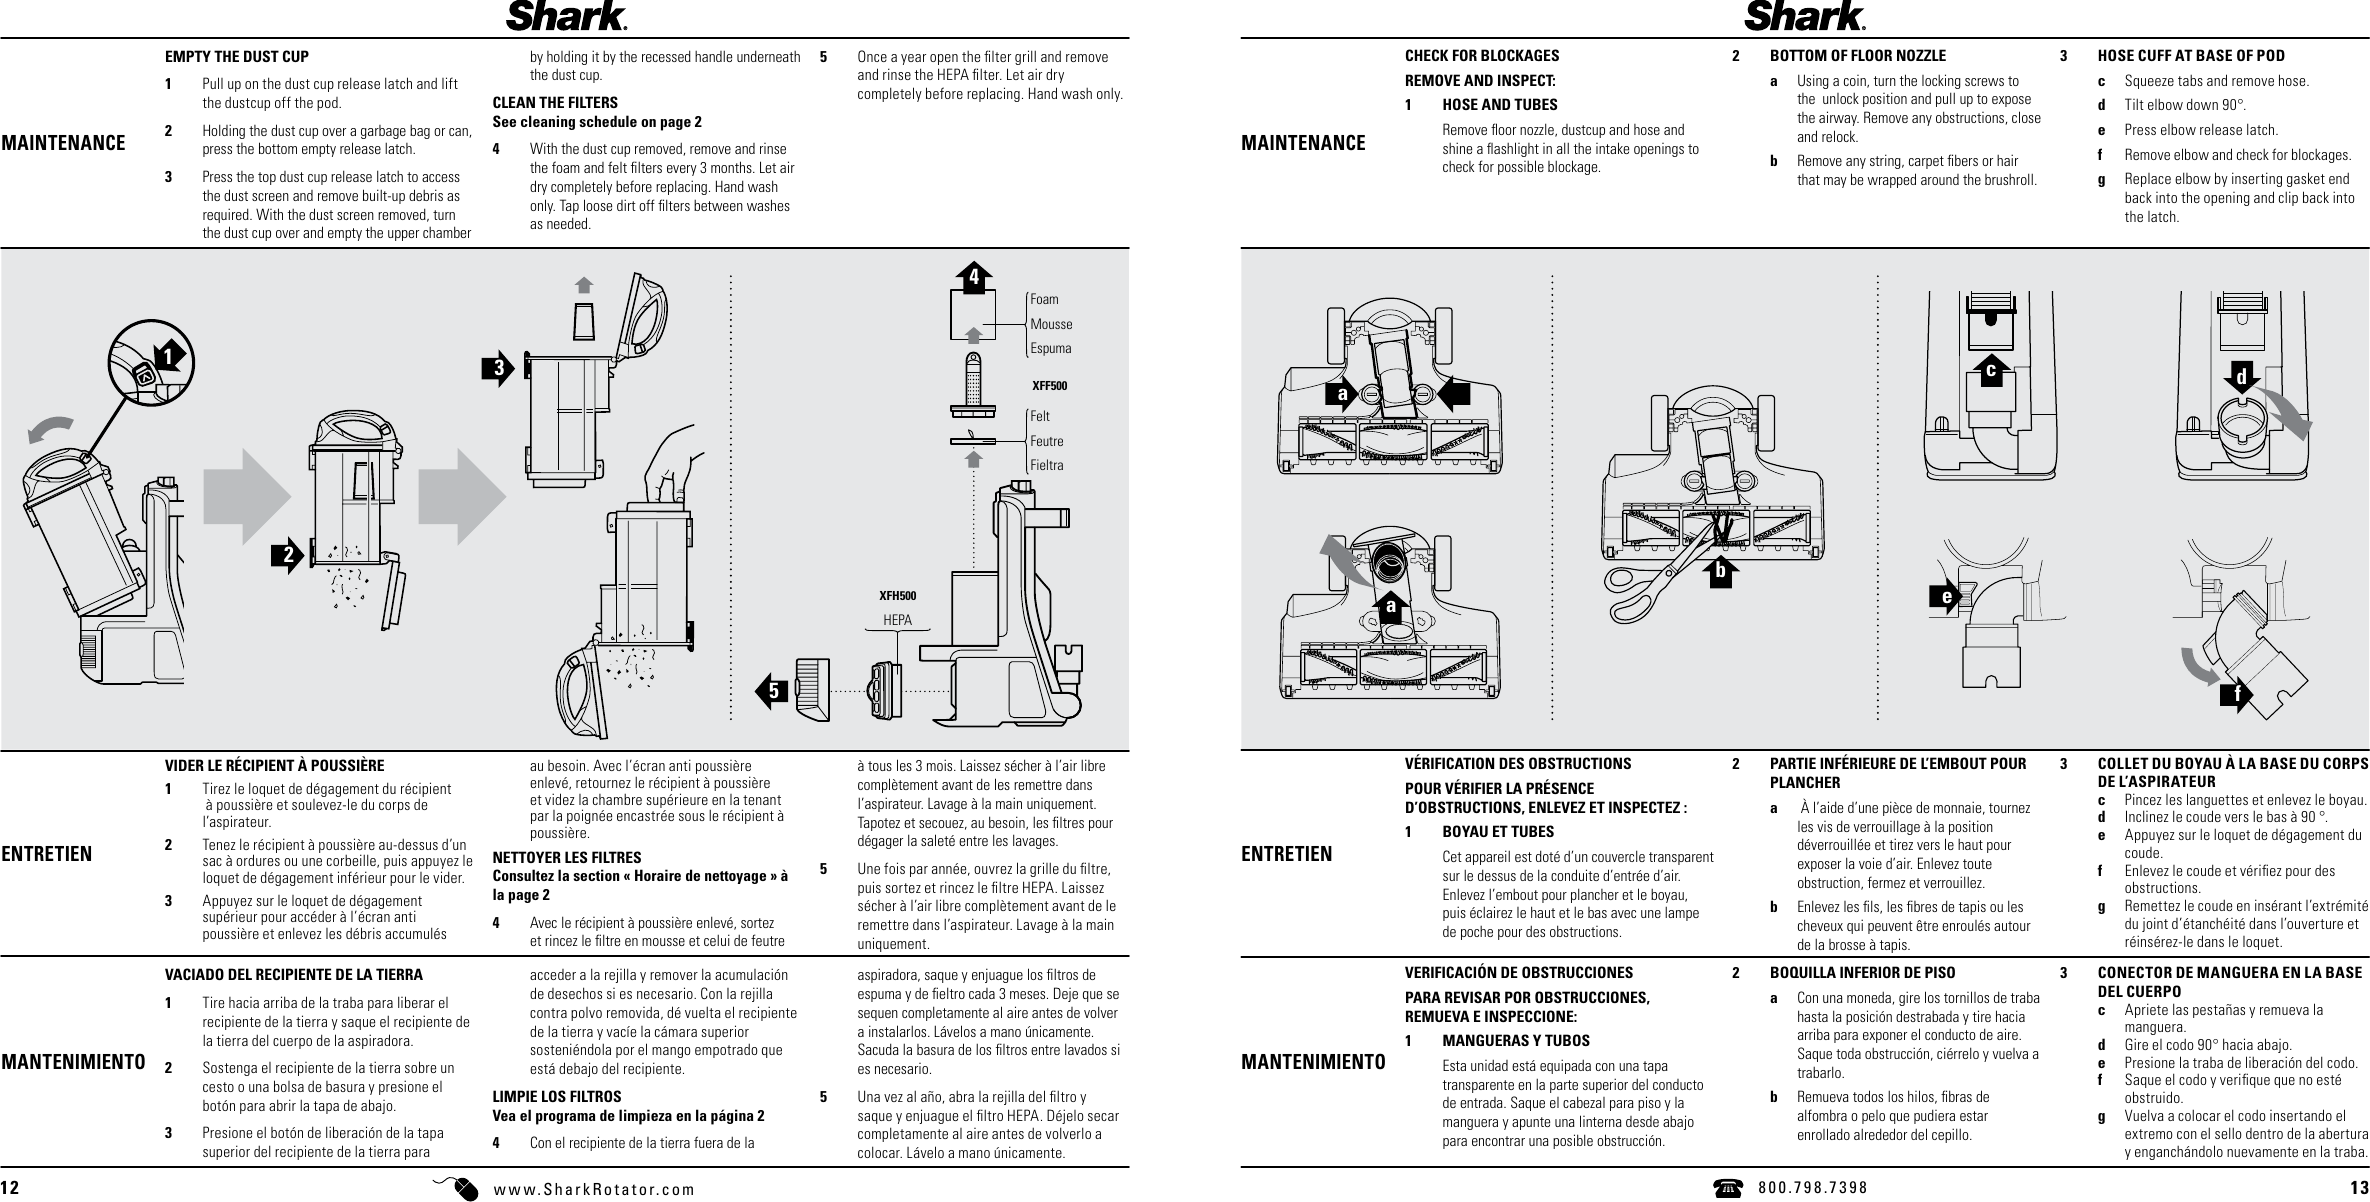 Page 7 of 9 - Shark Shark-Shark-Rotator-Professional-Lift-Away-Nv501-Users-Manual-  Shark-shark-rotator-professional-lift-away-nv501-users-manual